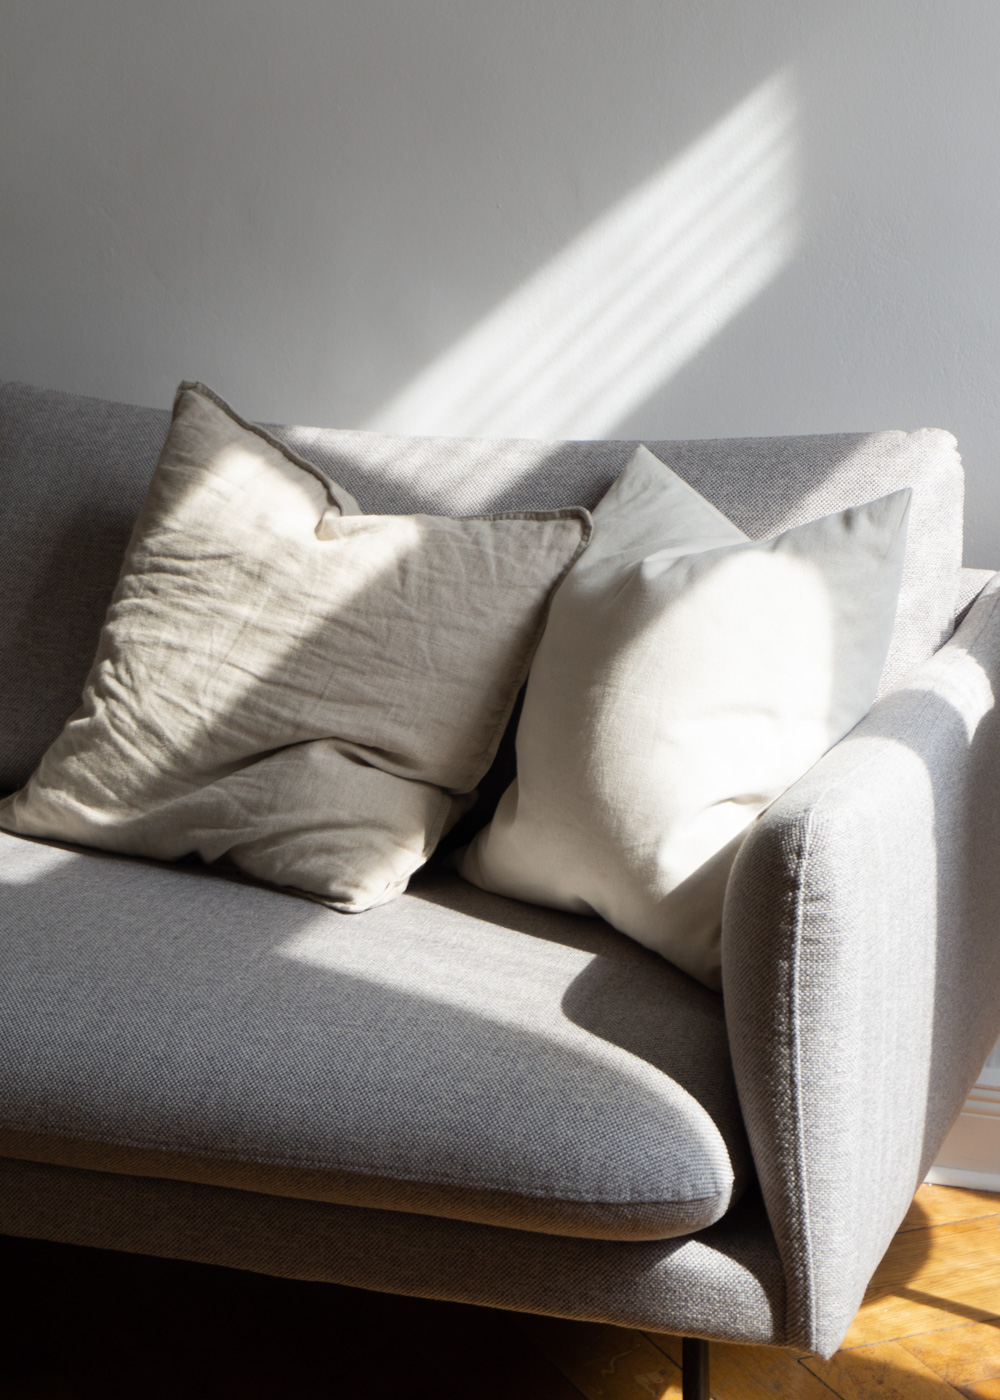 Grey Sofa, Beige Pillows, Light and Shadows - Neutral Home, Scandinavian Aesthetic, Berlin Apartment, White Interior, Calm Lighting | RG Daily Blog